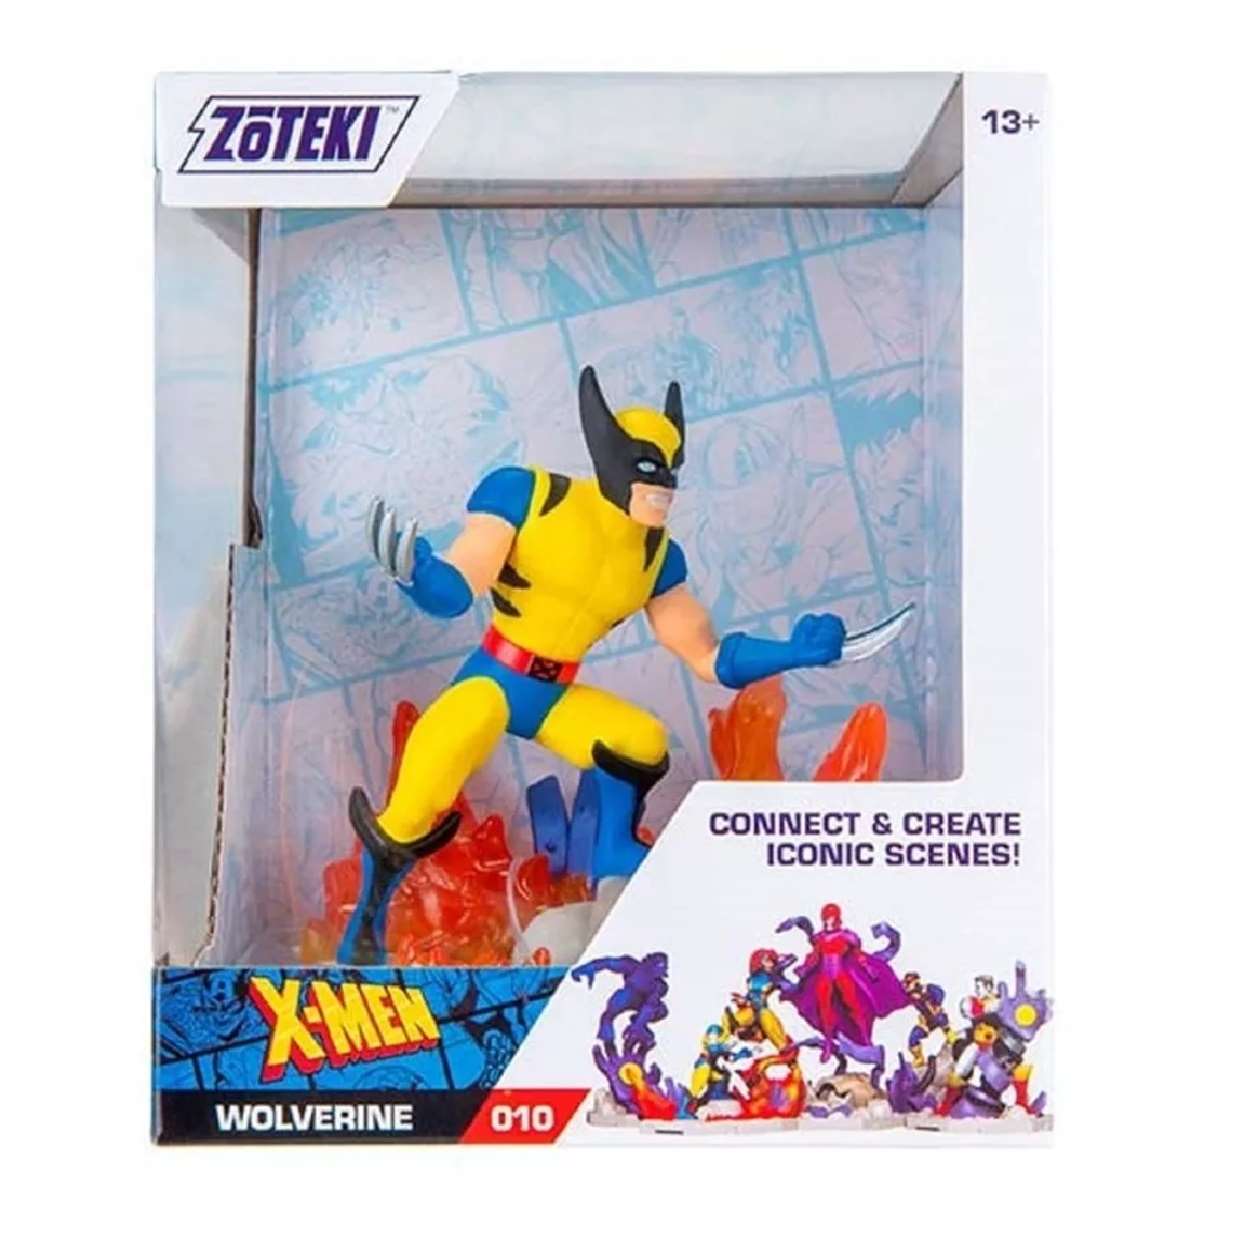 Wolverine #010 Figura Marvel X- Men Zoteki 4 Pulgadas